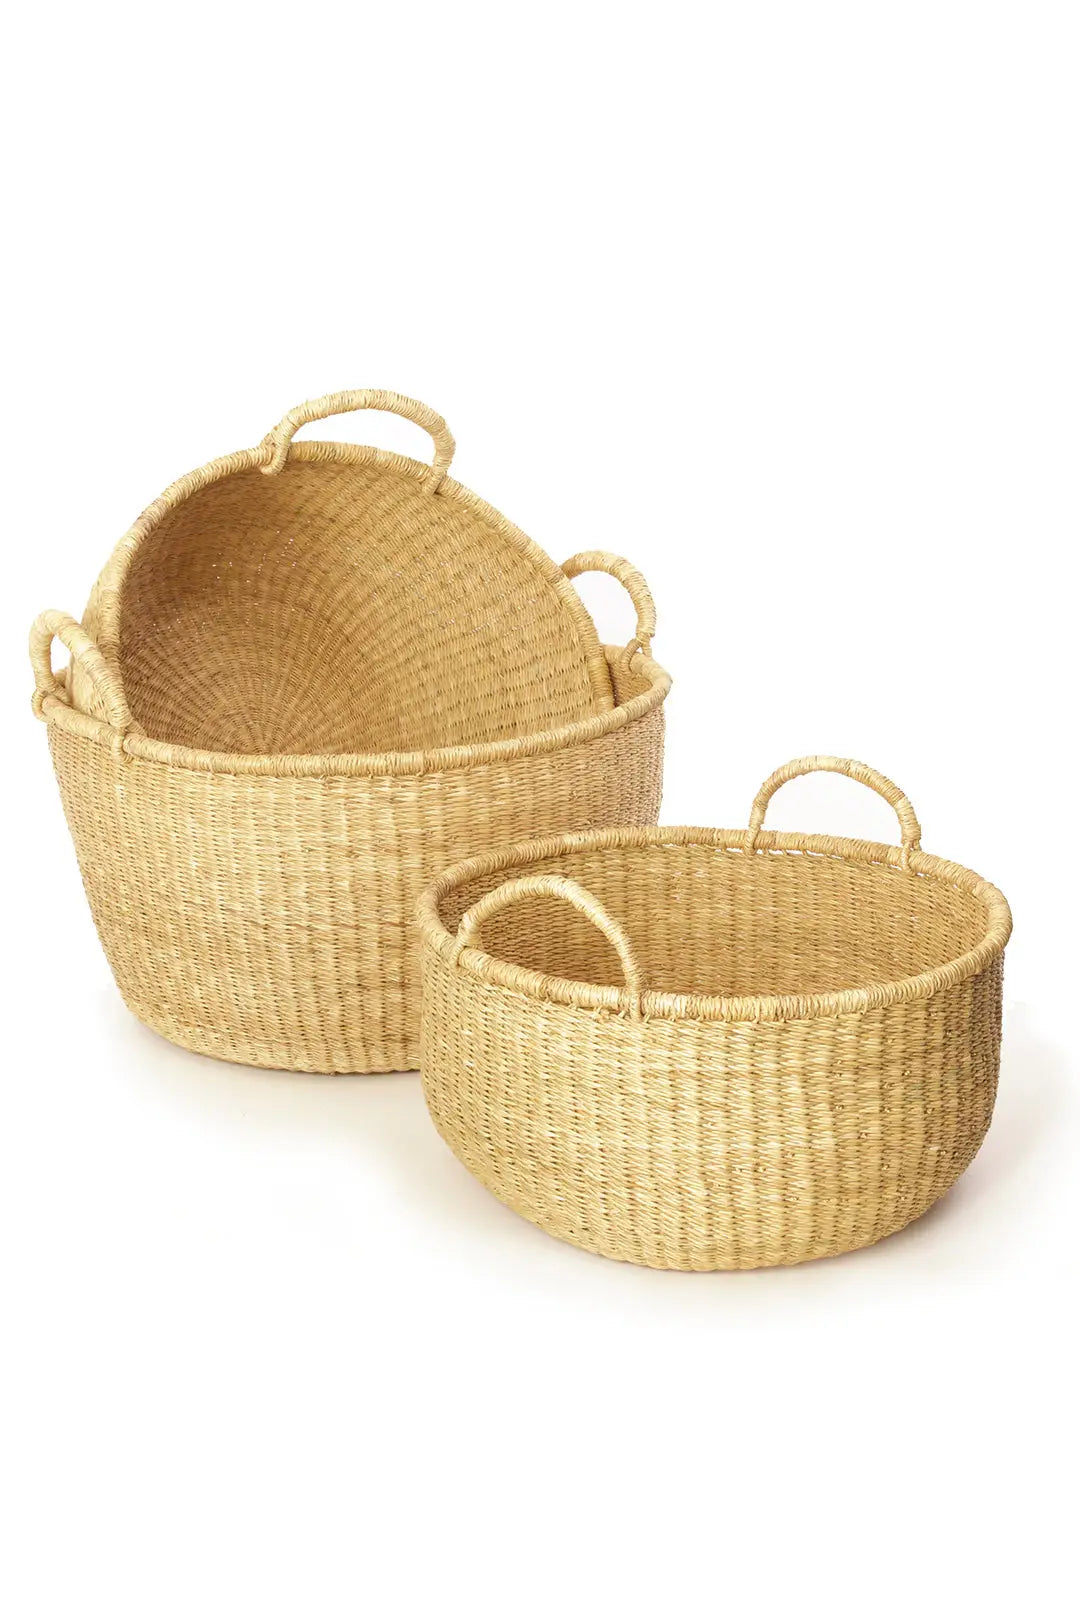 Two Handled Short Floor Baskets